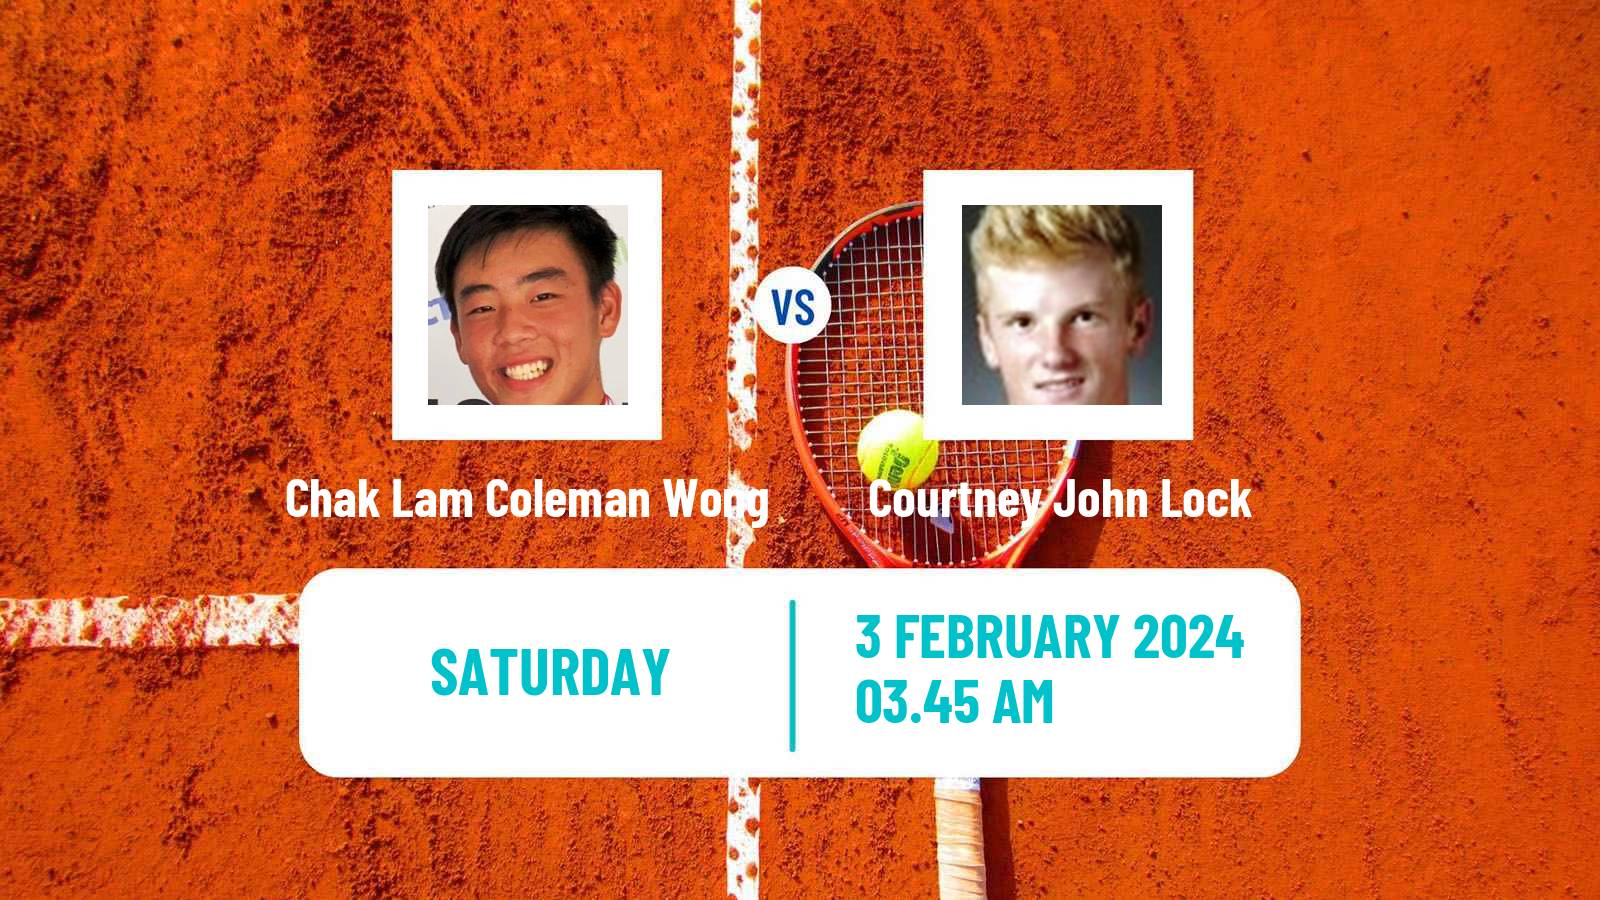 Tennis Davis Cup World Group II Chak Lam Coleman Wong - Courtney John Lock